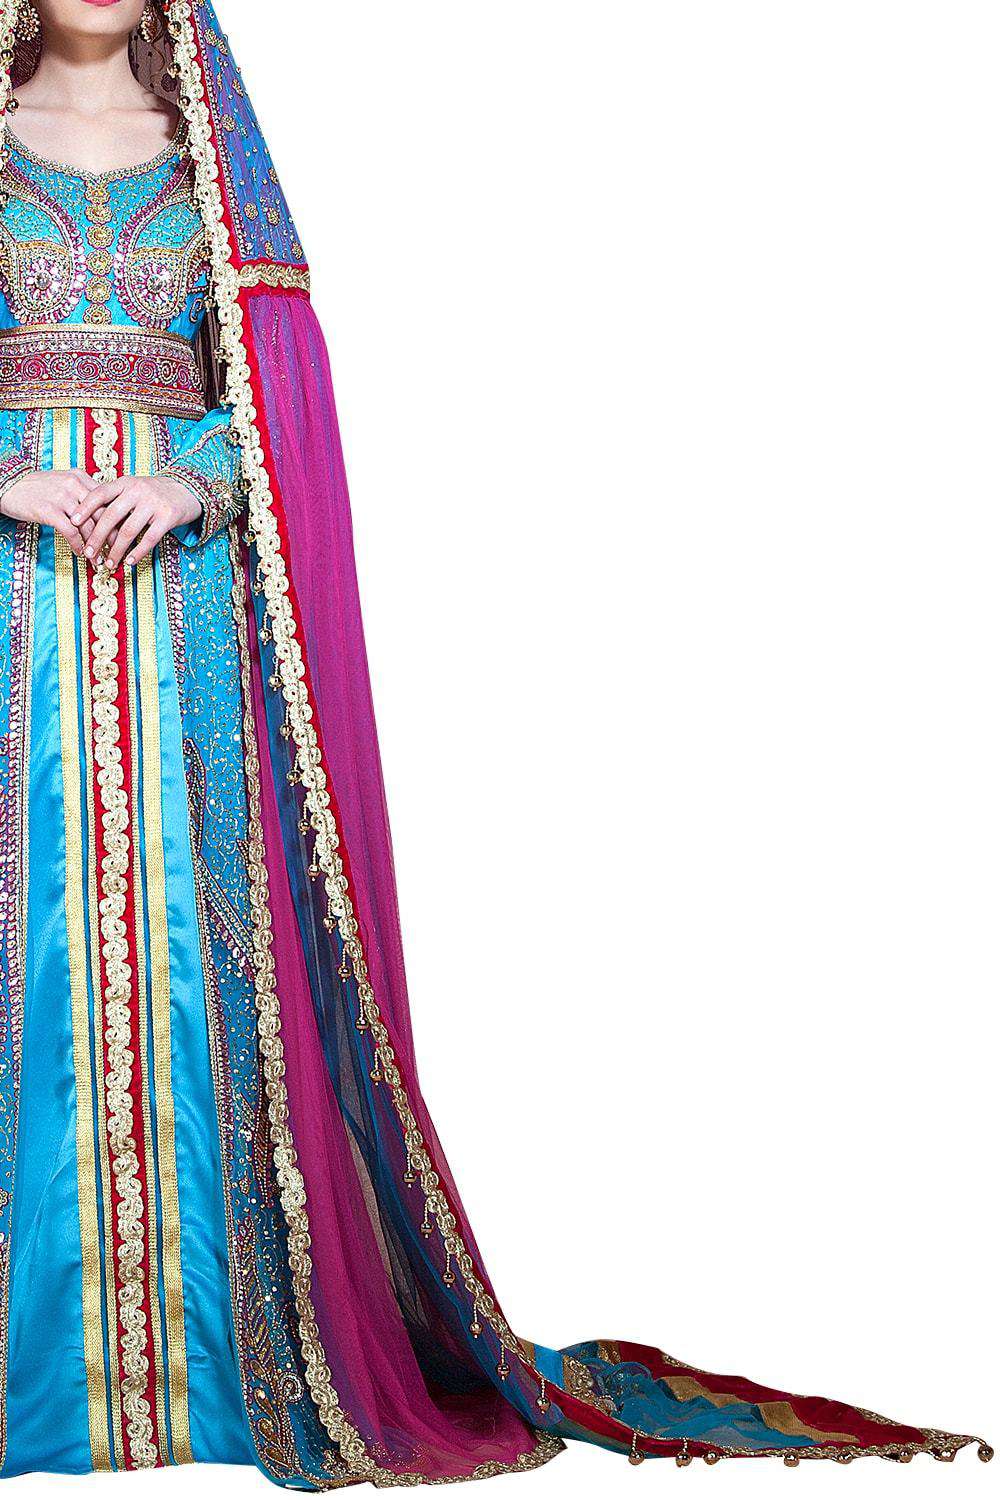 Ferozi and Dark Pink Color Designer Arabic Muslim Long Sleeve Wedding Caftan With Veil